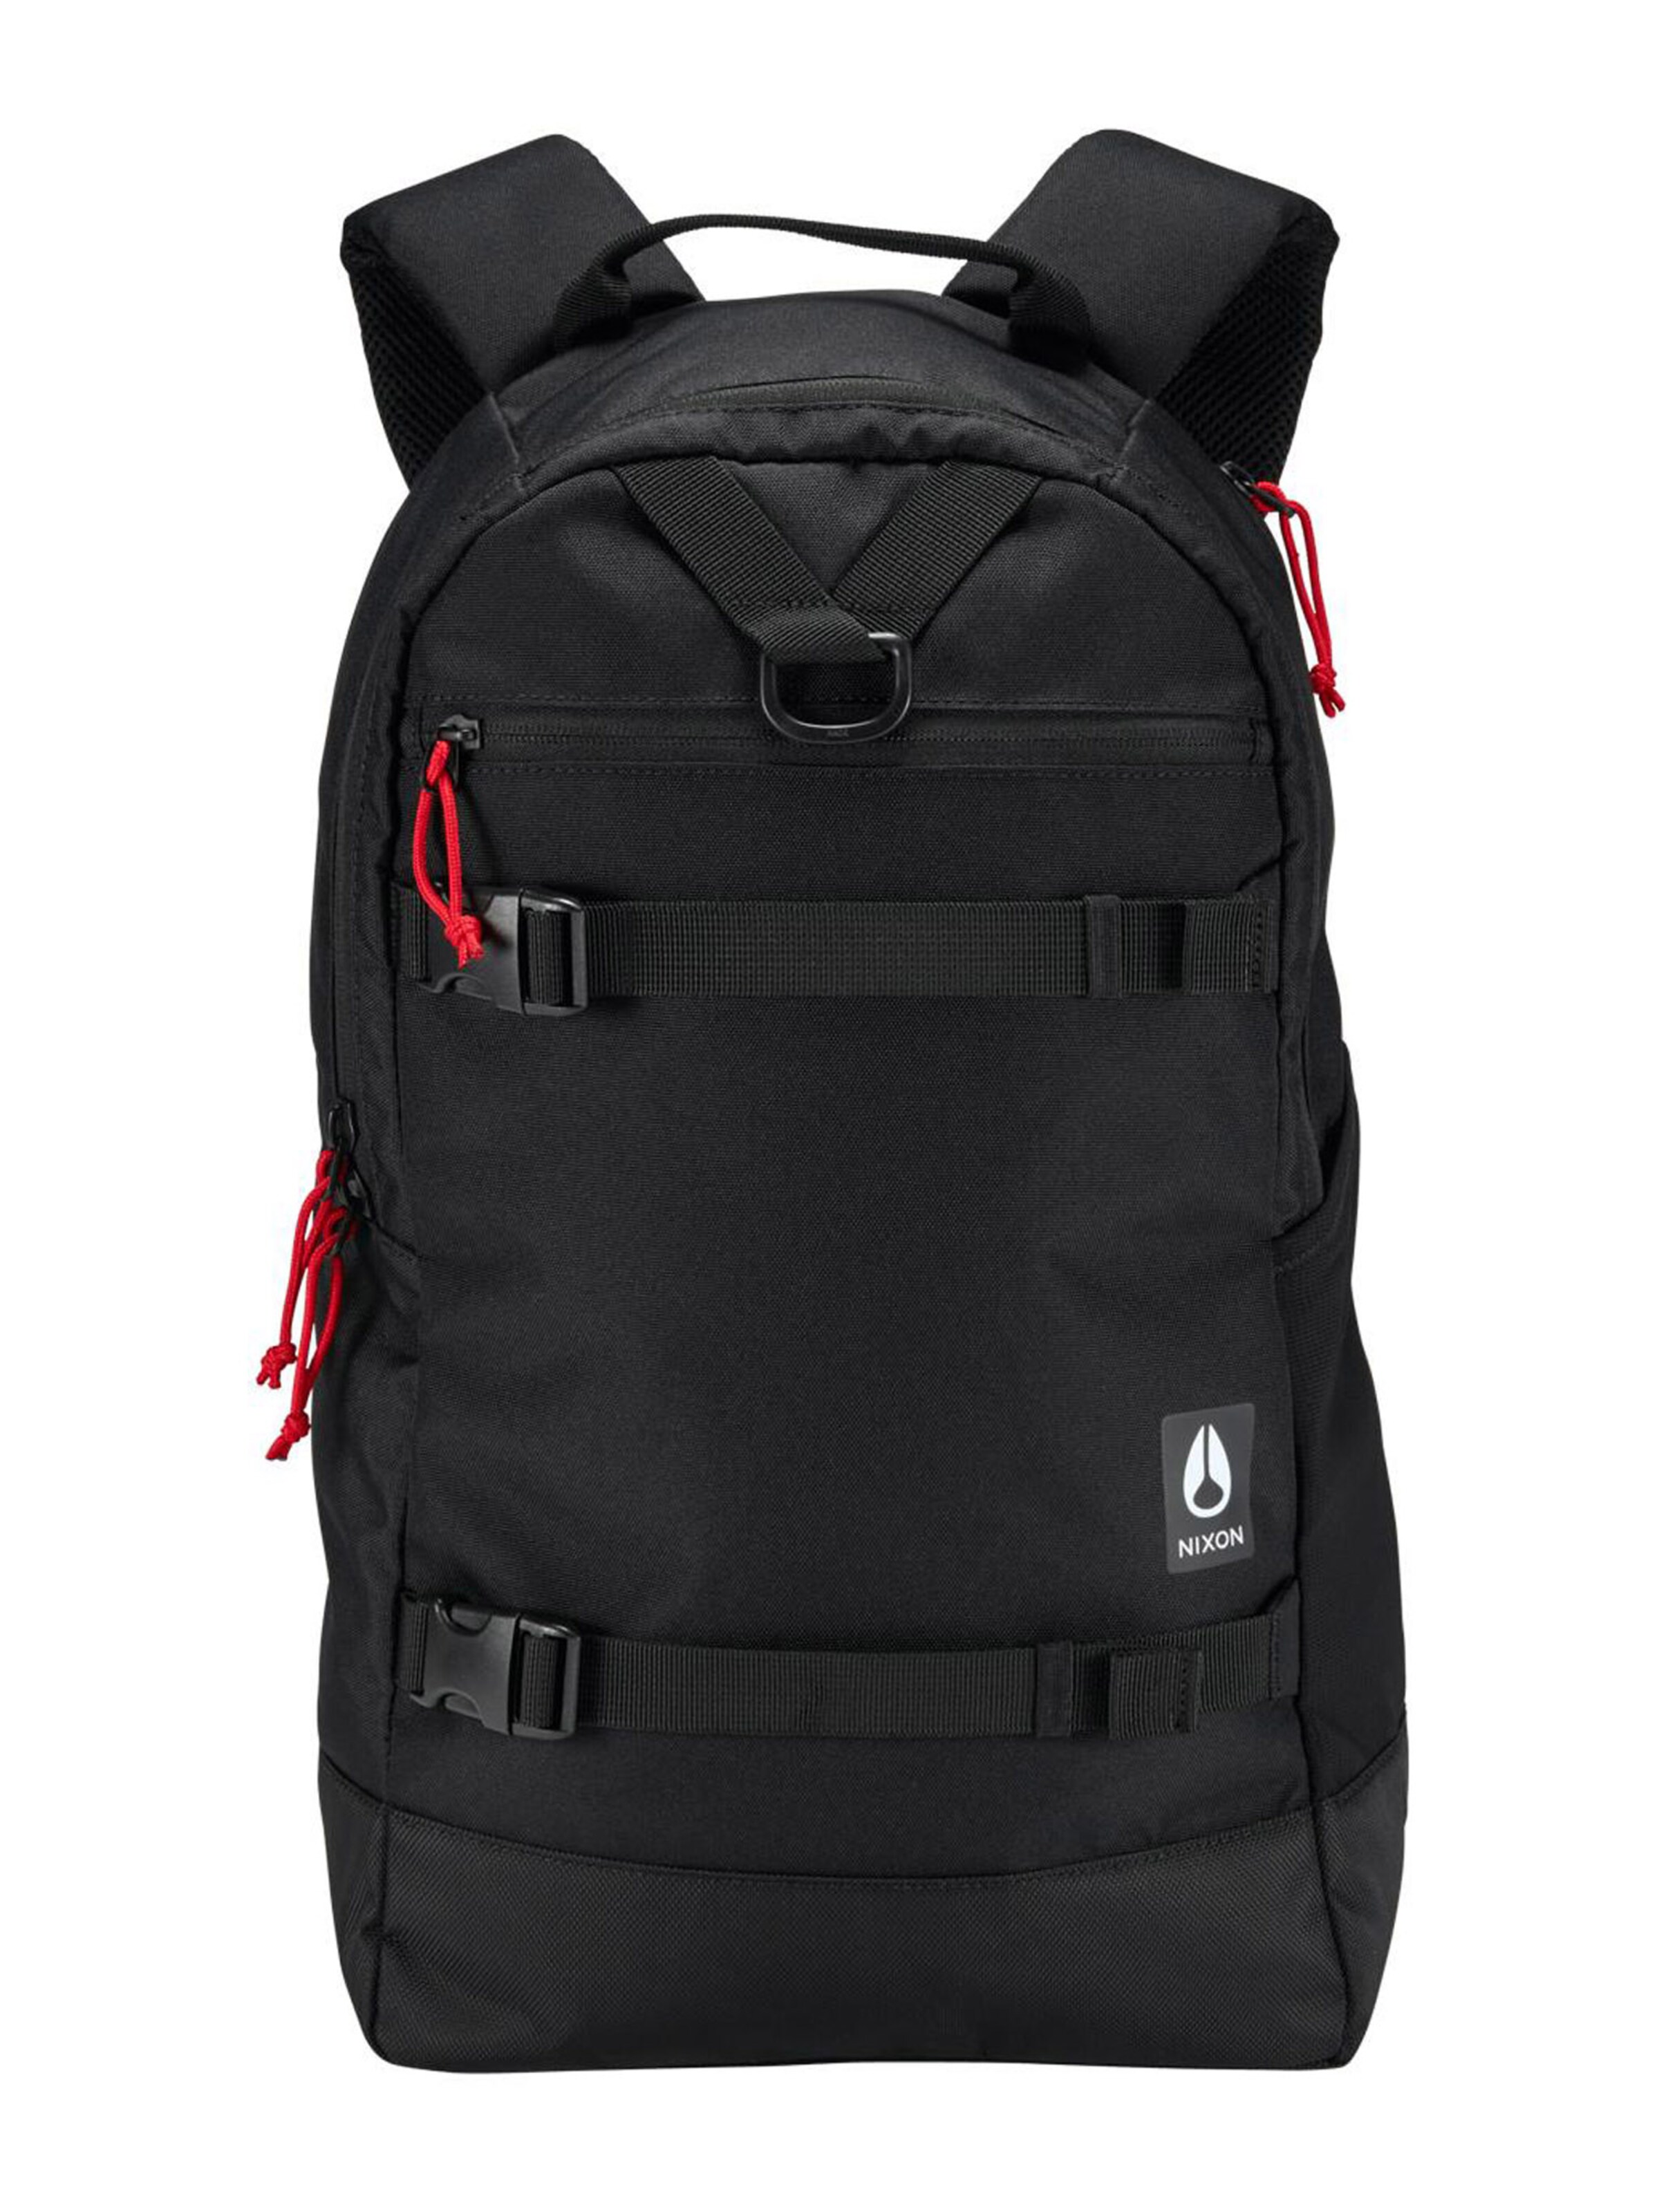 Nixon Waterlock I Black Backpack Bag Rucksack Padded Buckle Pockets  Compartment | eBay